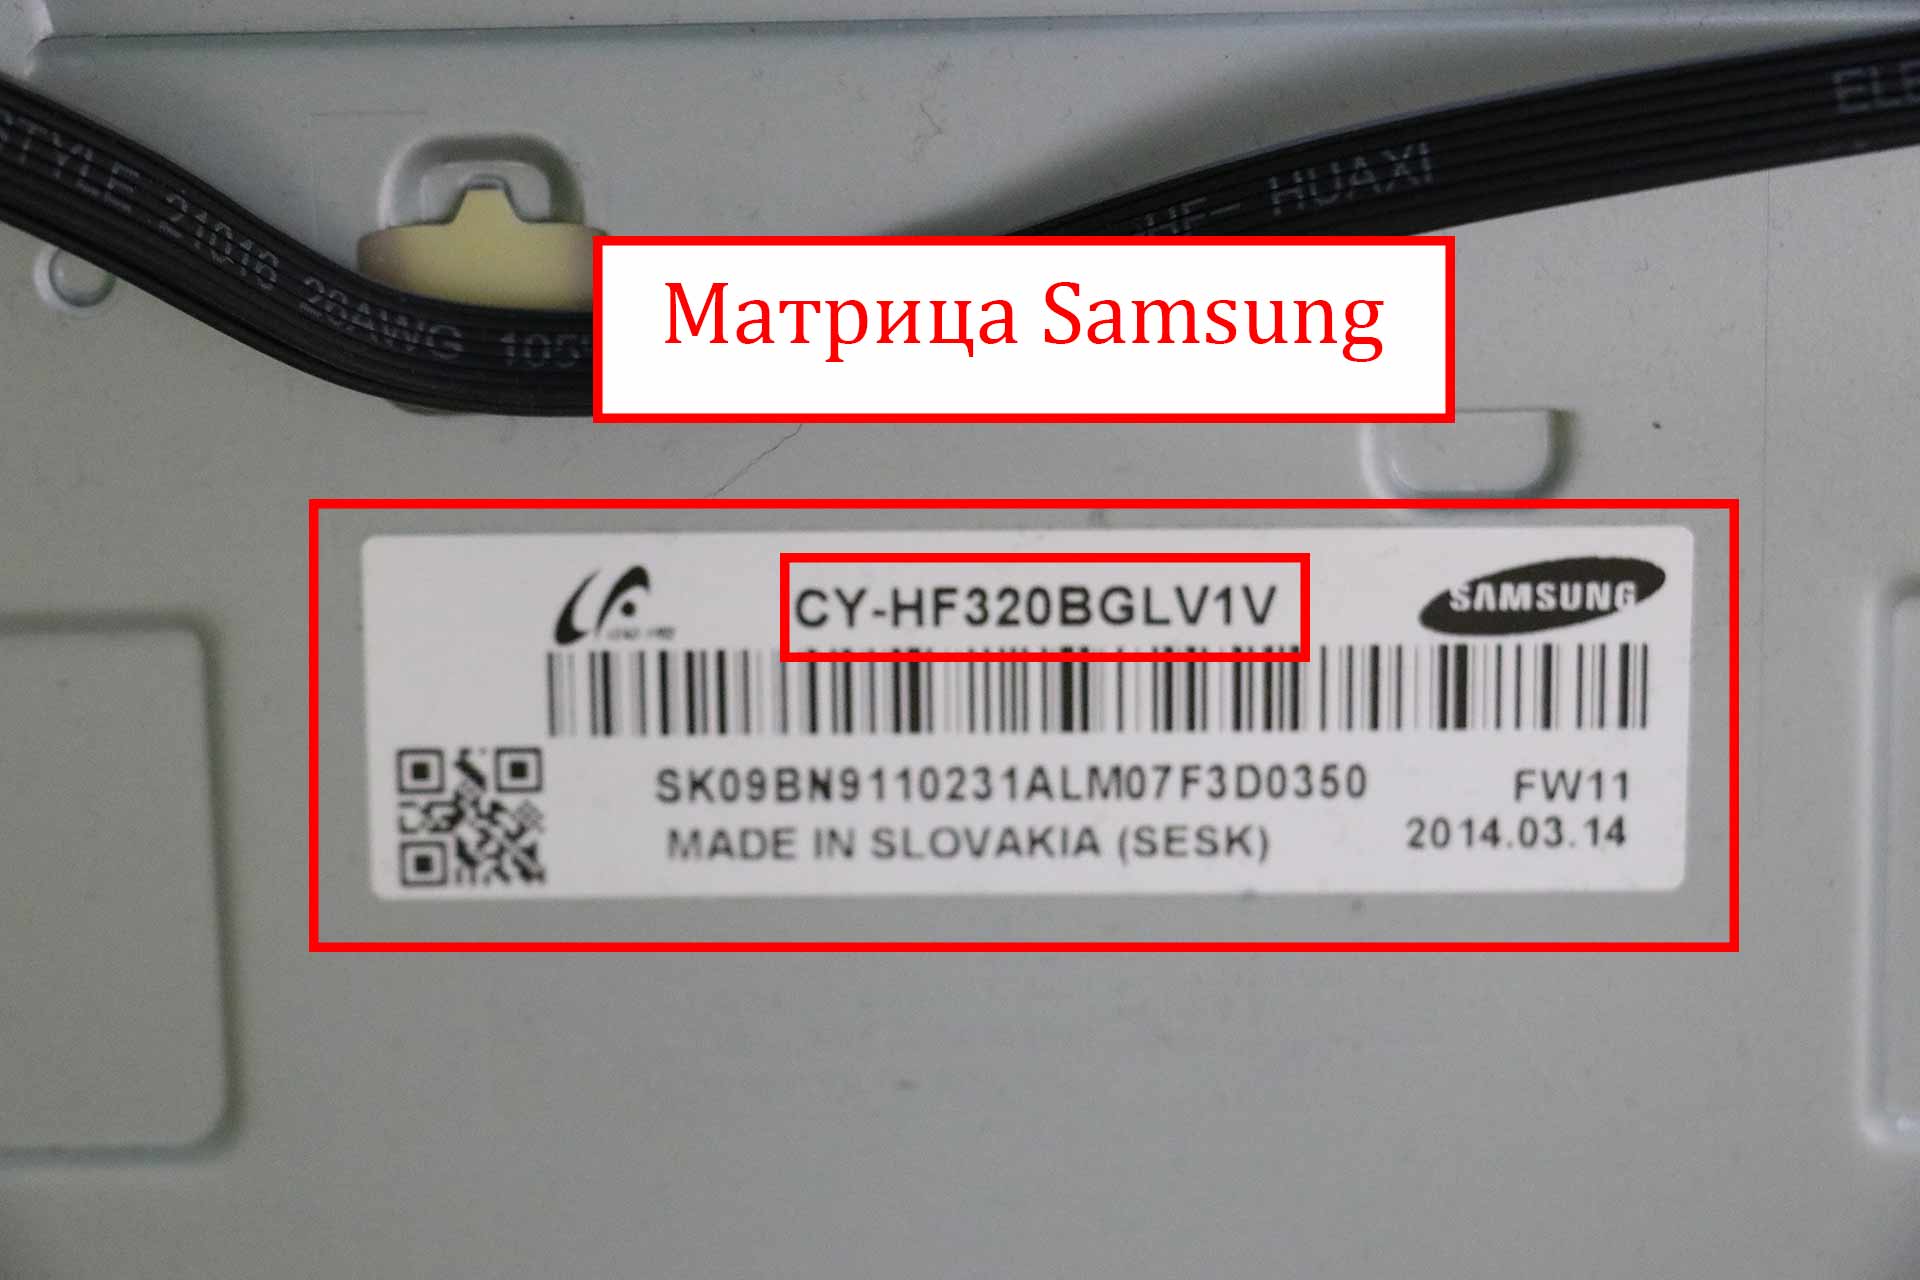 Как проверить матрицу телевизора. Телевизор Samsung матрица Type. Номер матрицы на телевизоре. Парт номер матрицы. Маркировка матрицы телевизора.